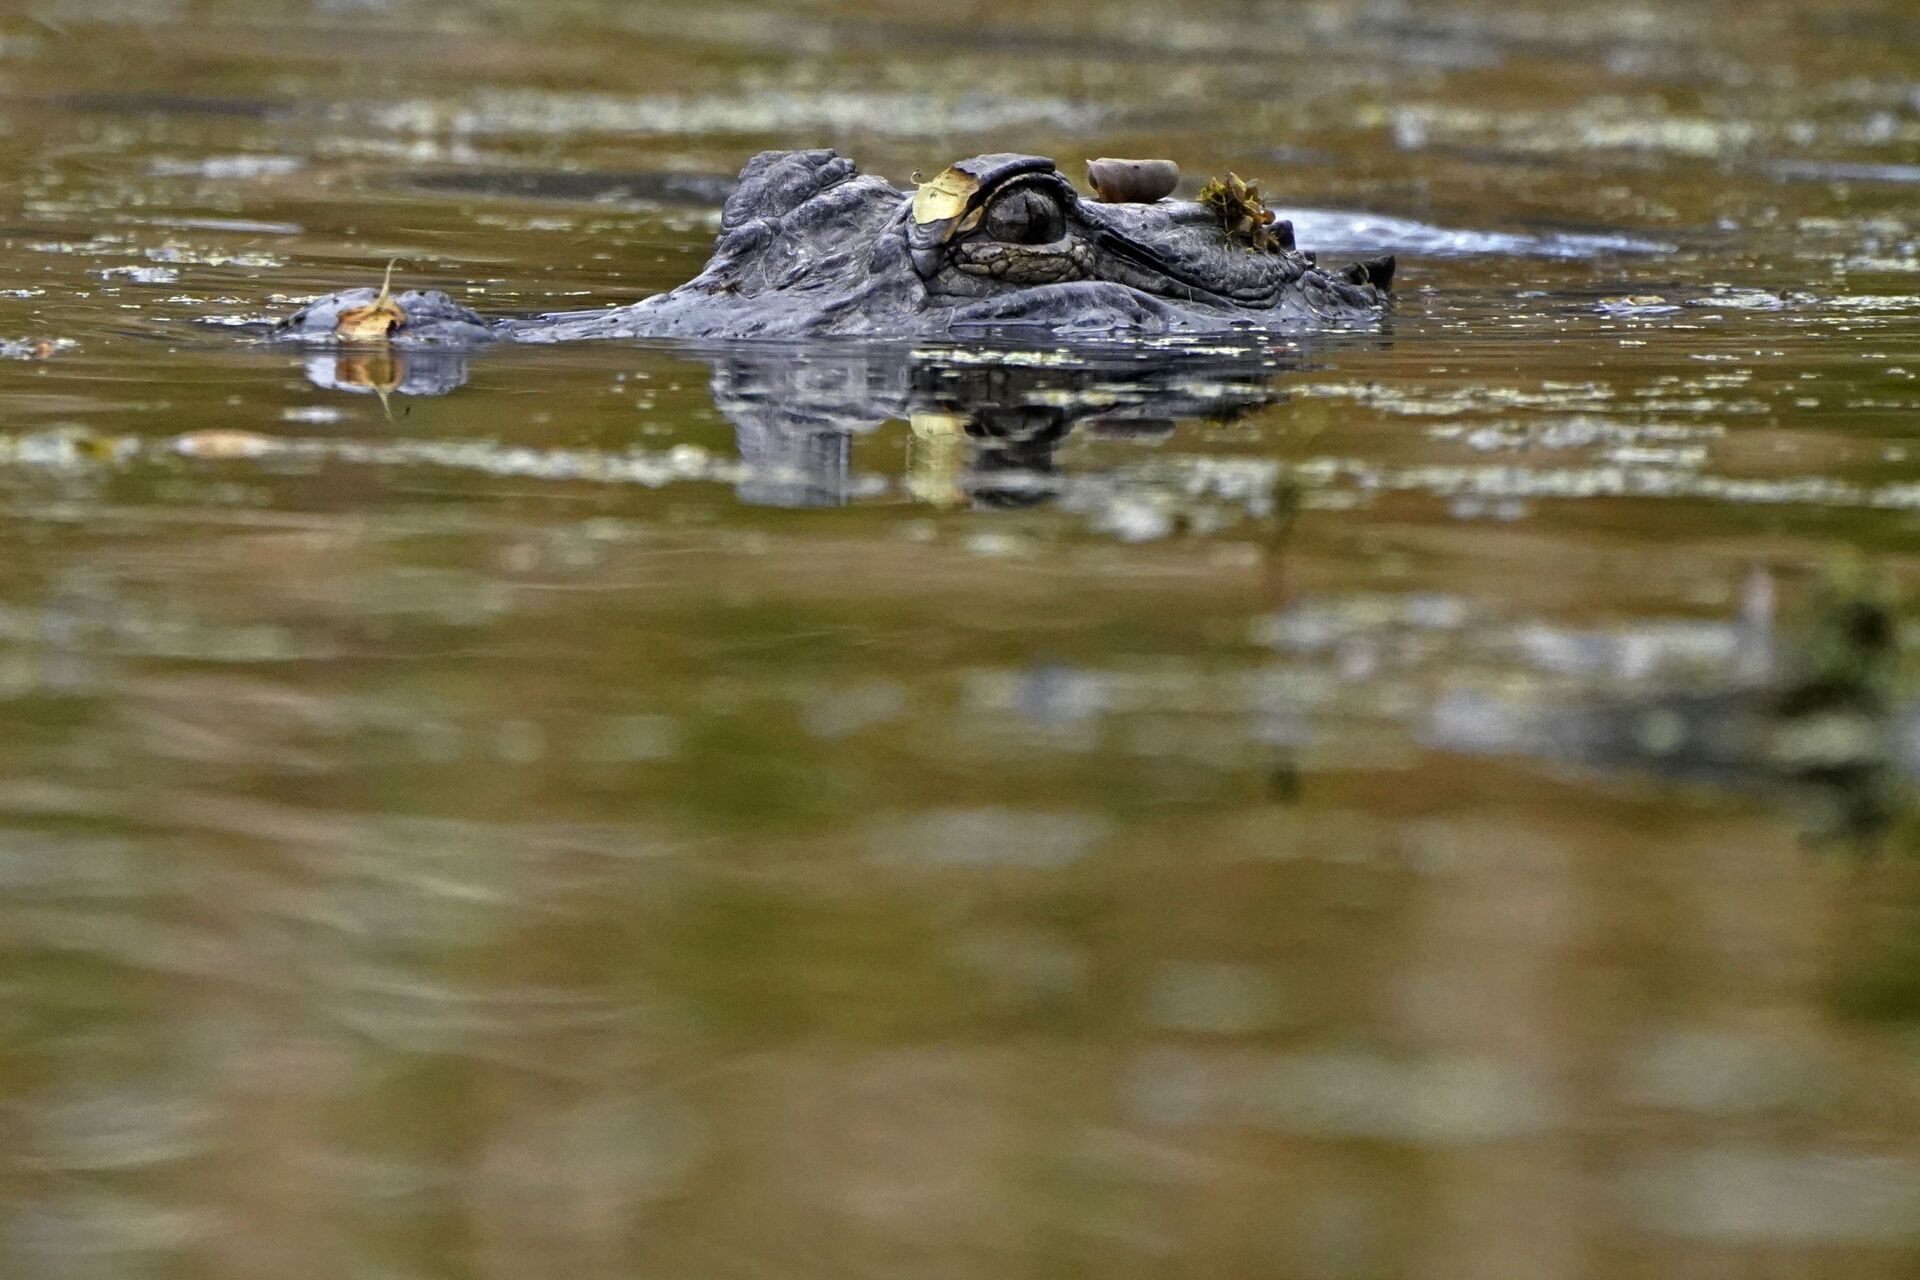 An alligator swims in the Maurepas Swamp, thirty miles outside New Orleans, in Ruddock, La., Saturday, Feb. 27, 2021. - Sputnik International, 1920, 07.09.2021